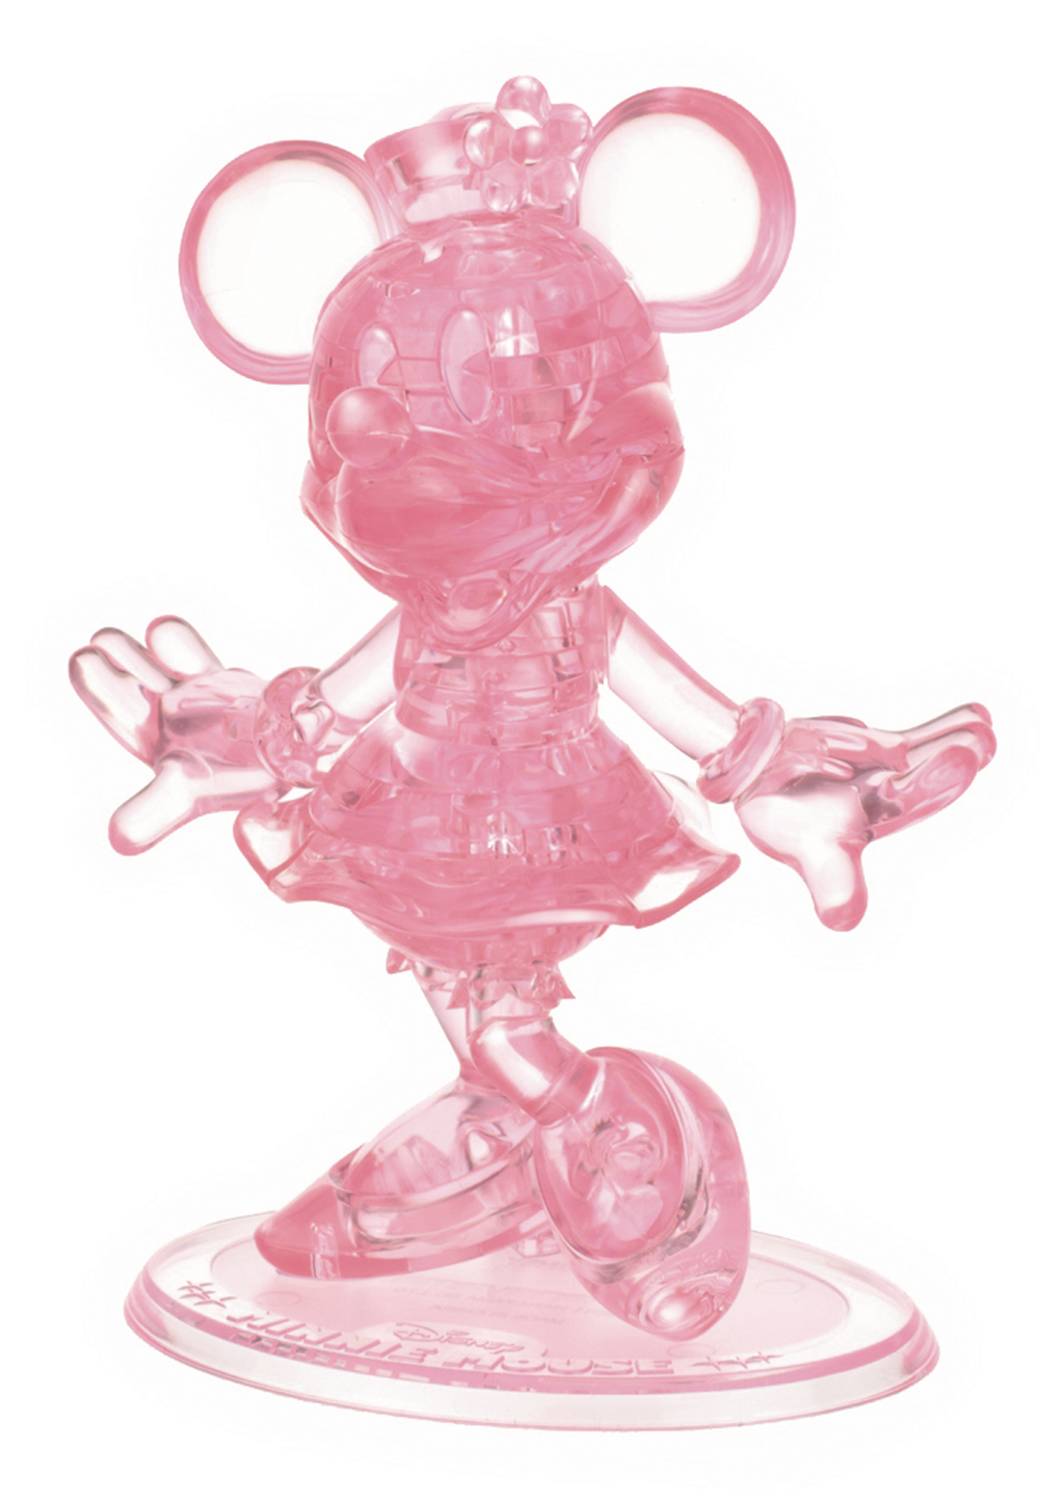  Disney 3D Crystal Puzzle Minnie Mouse